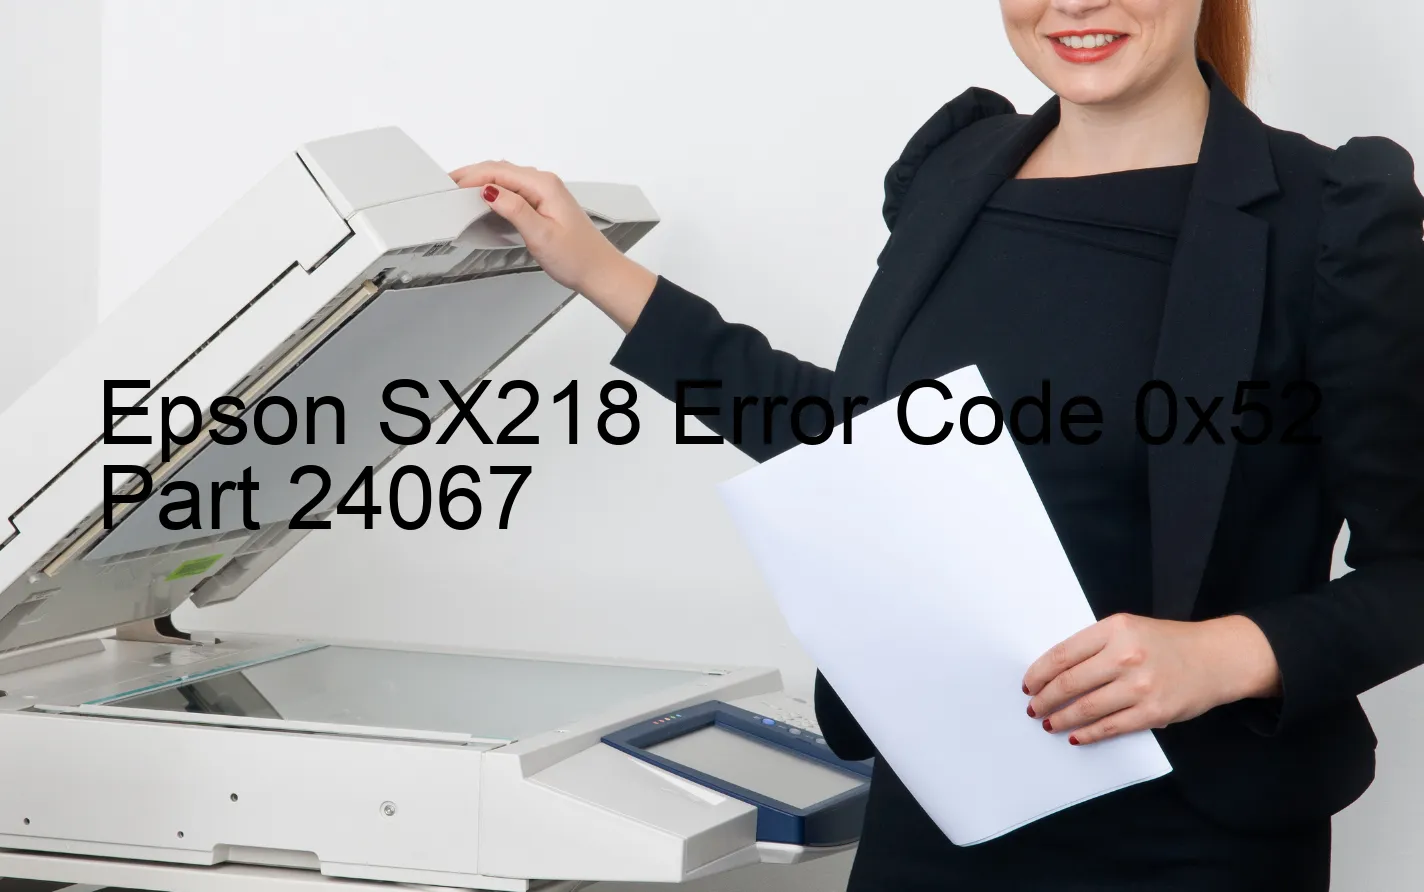 Epson SX218 Fehlercode 0x52